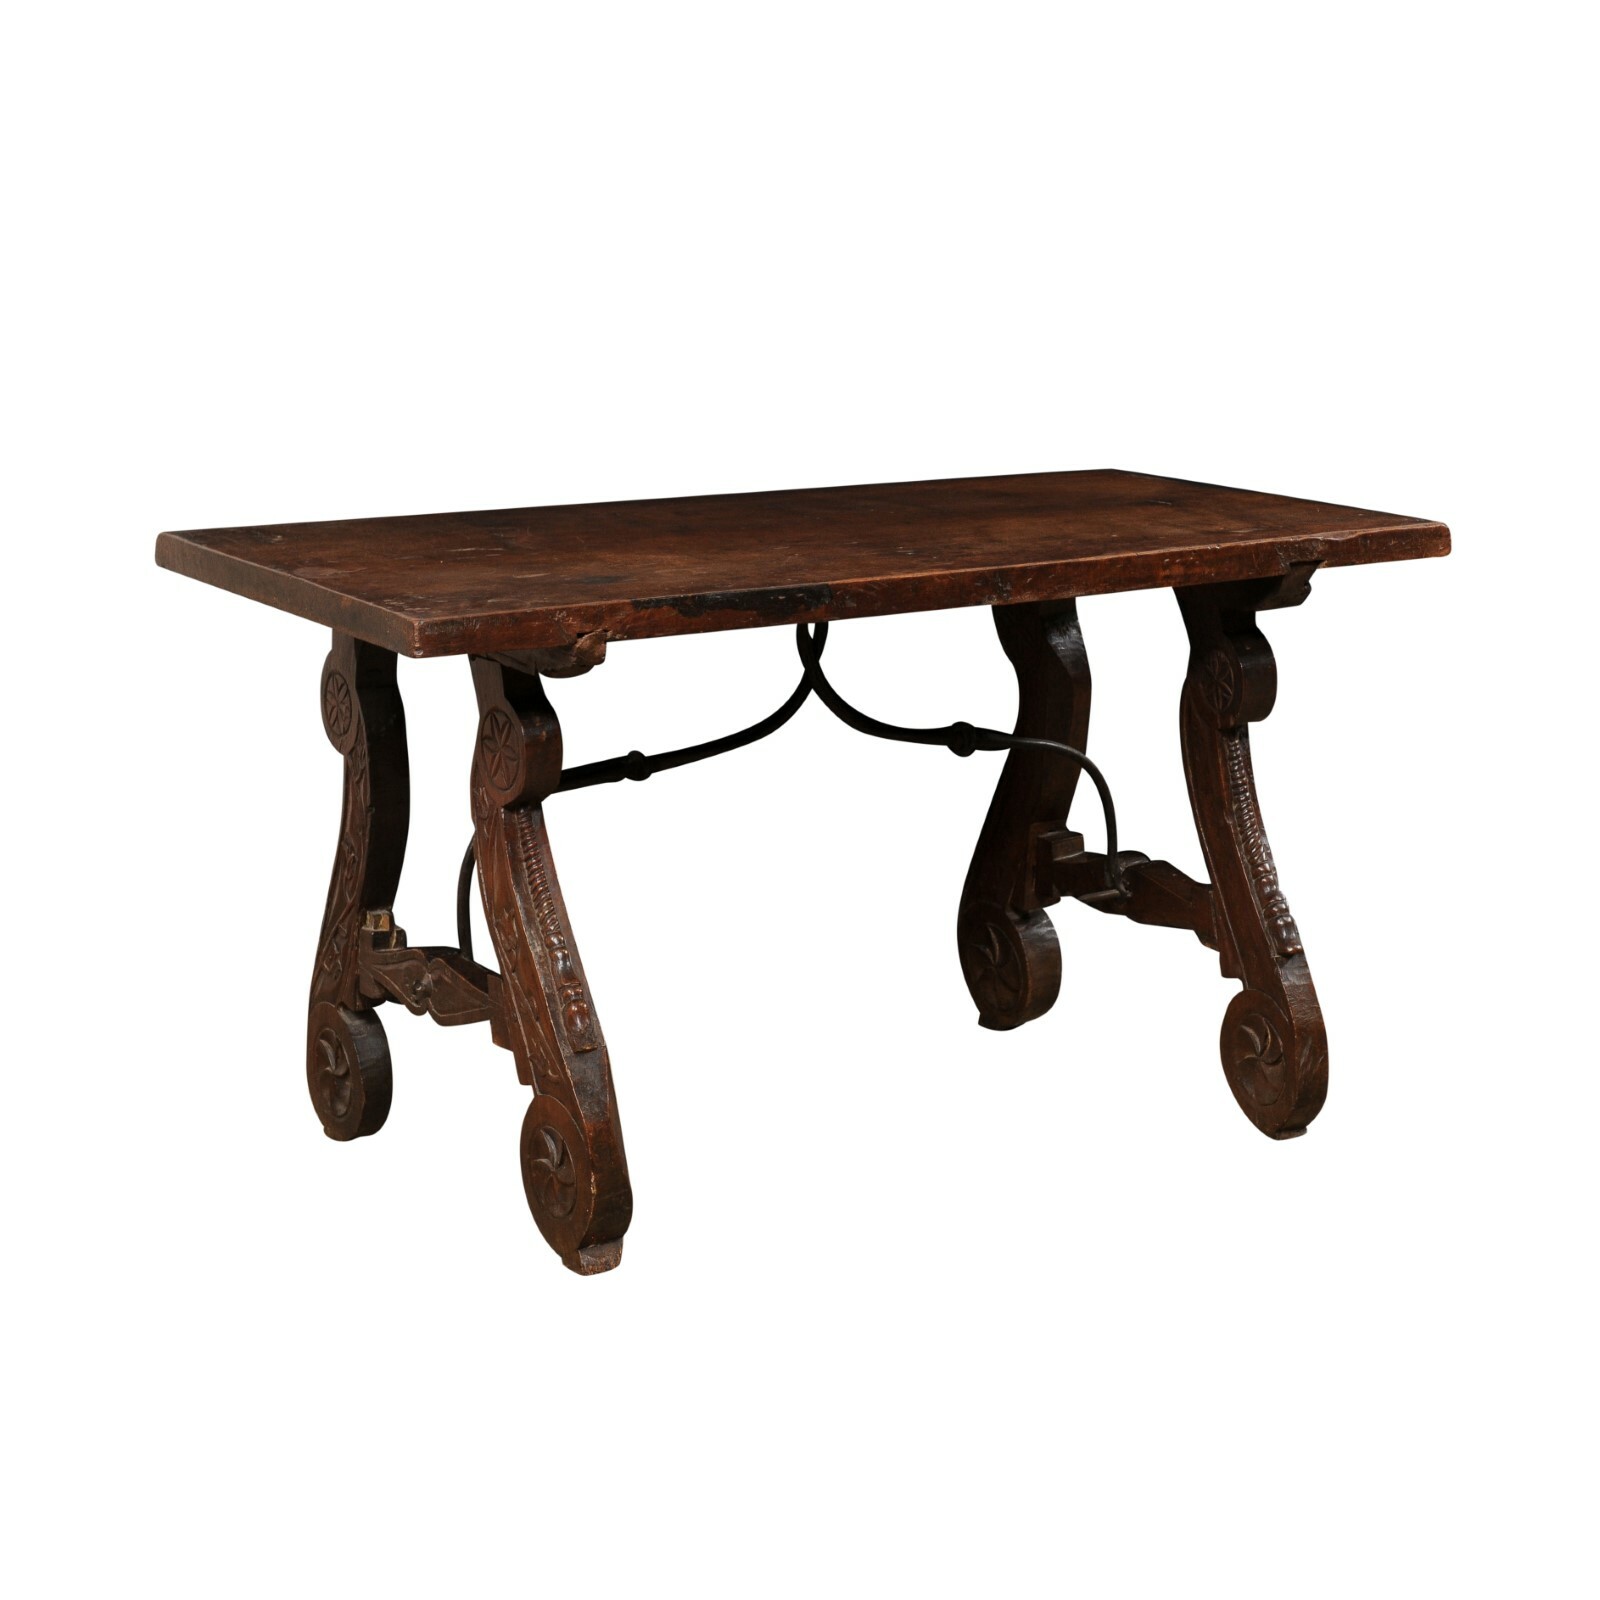 18th C. Spanish Walnut Stretcher Table